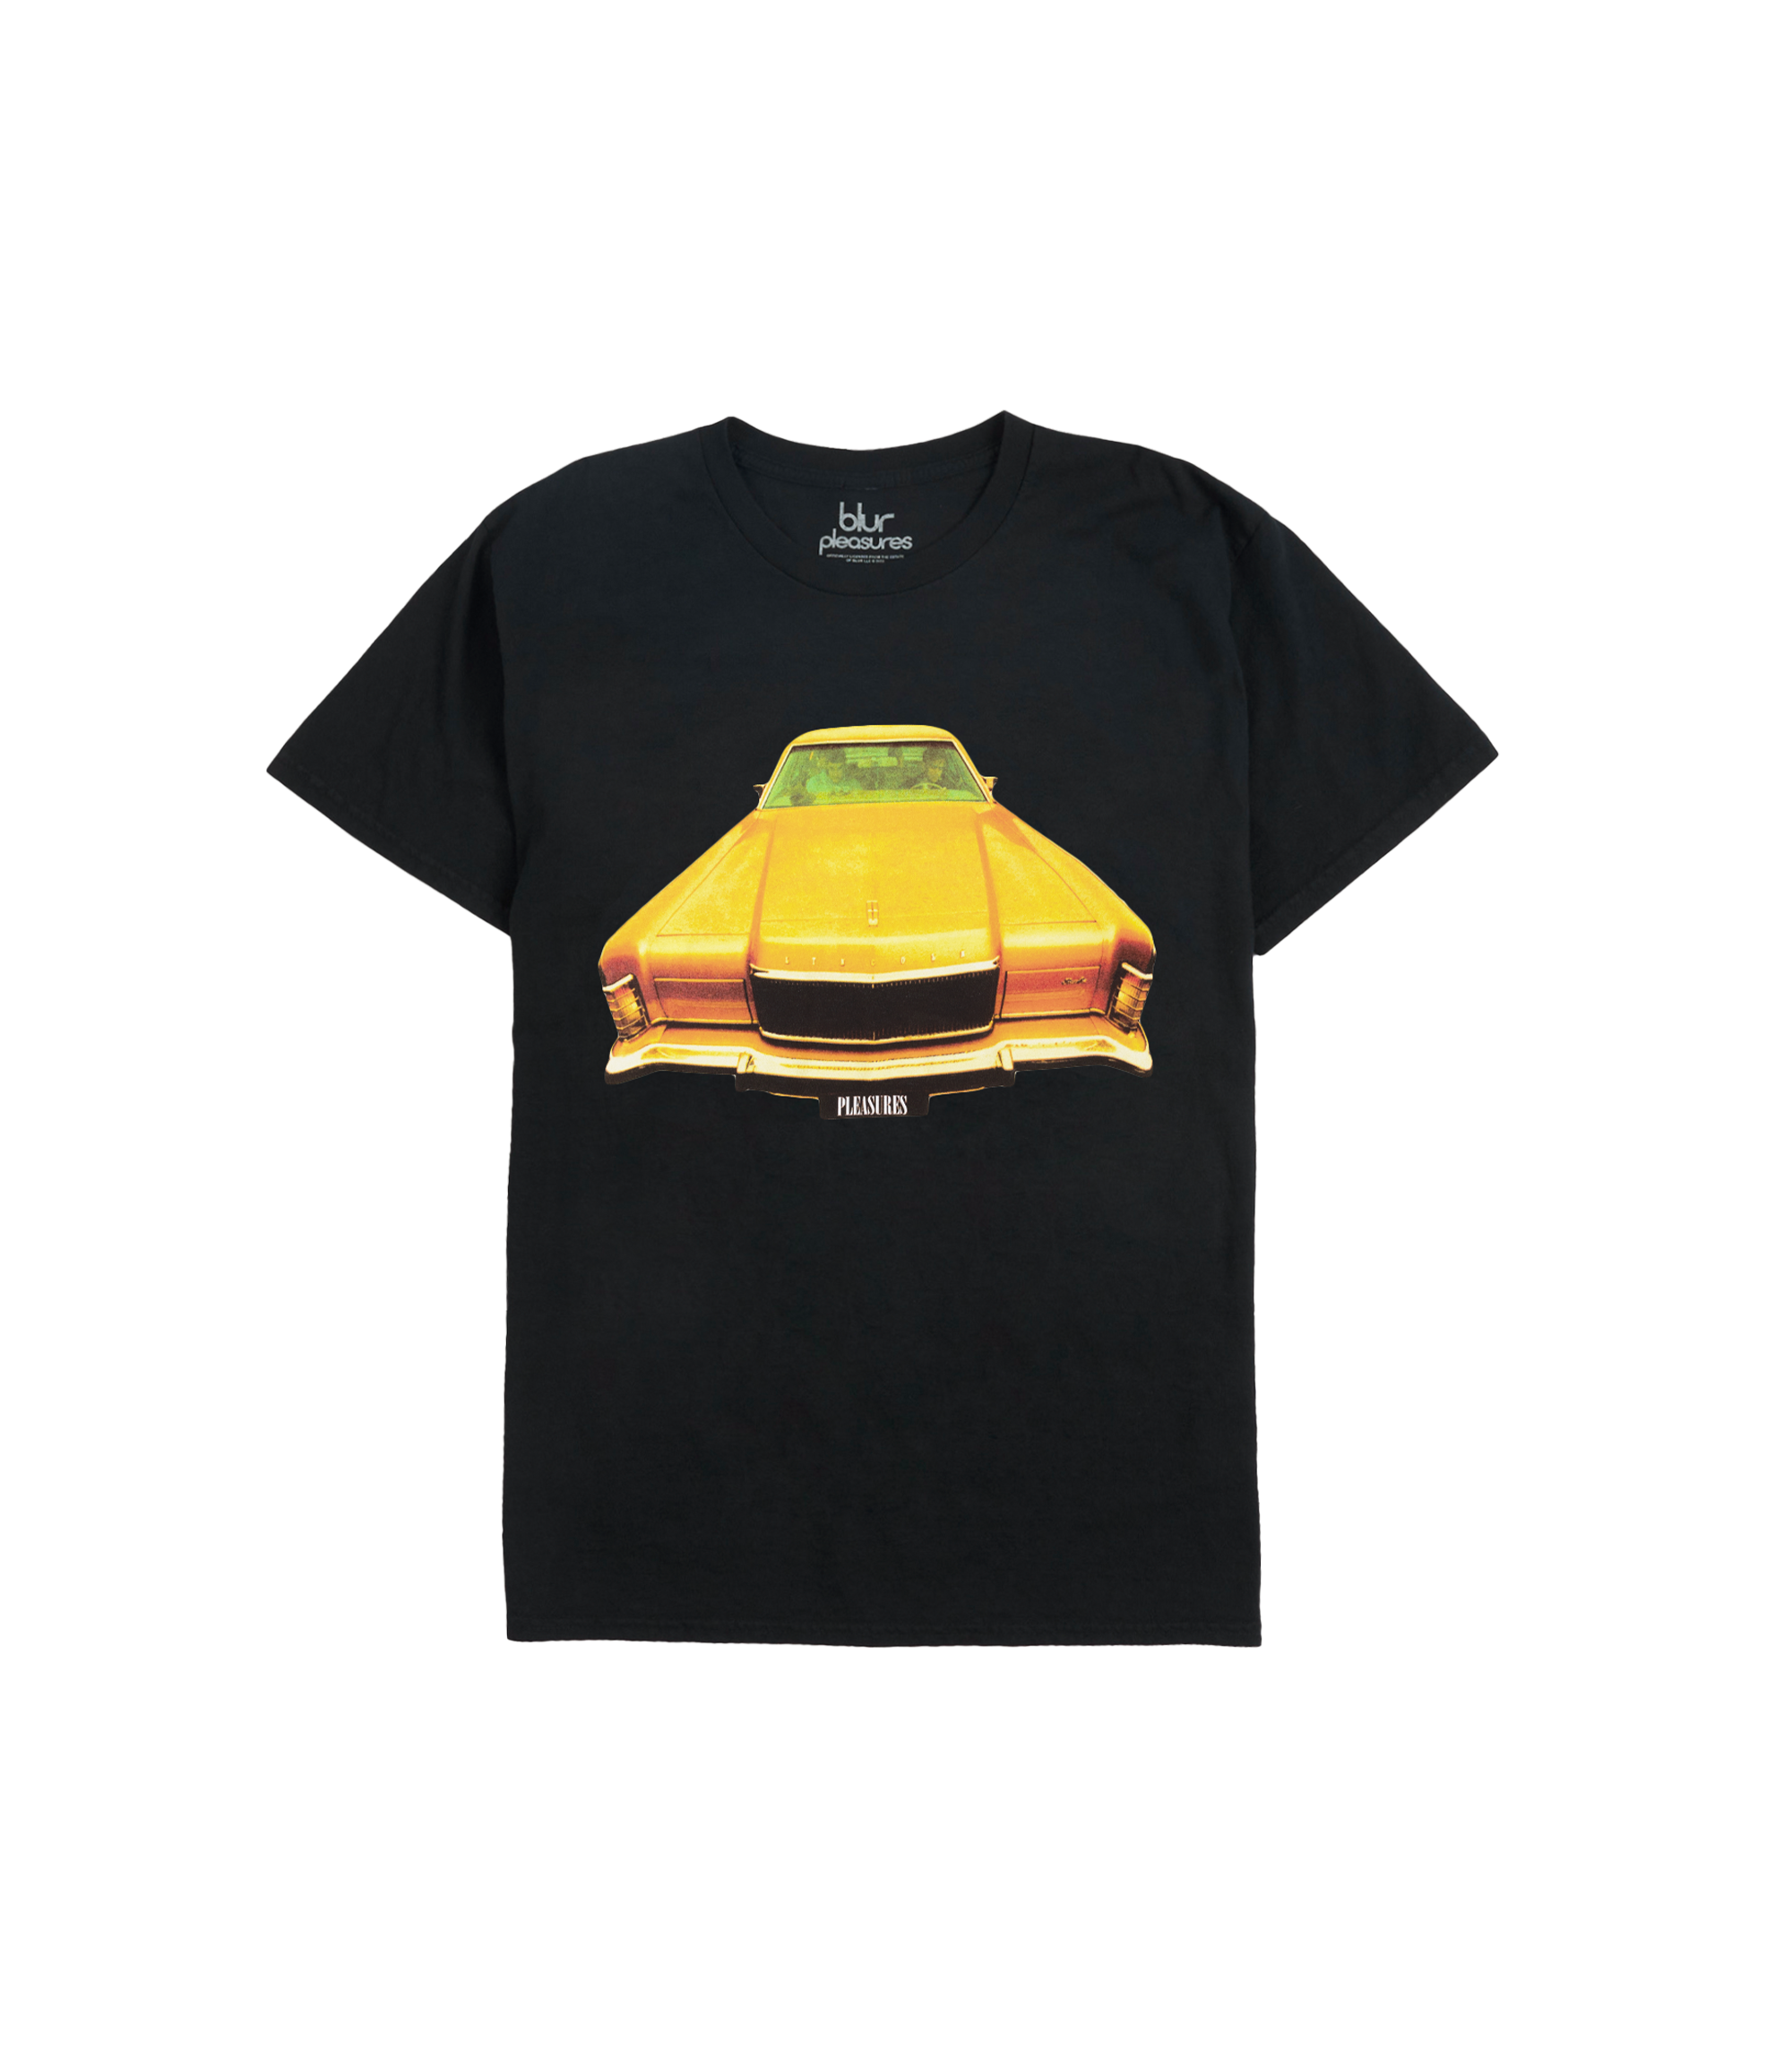 Blur Song 2 T-shirt - Black